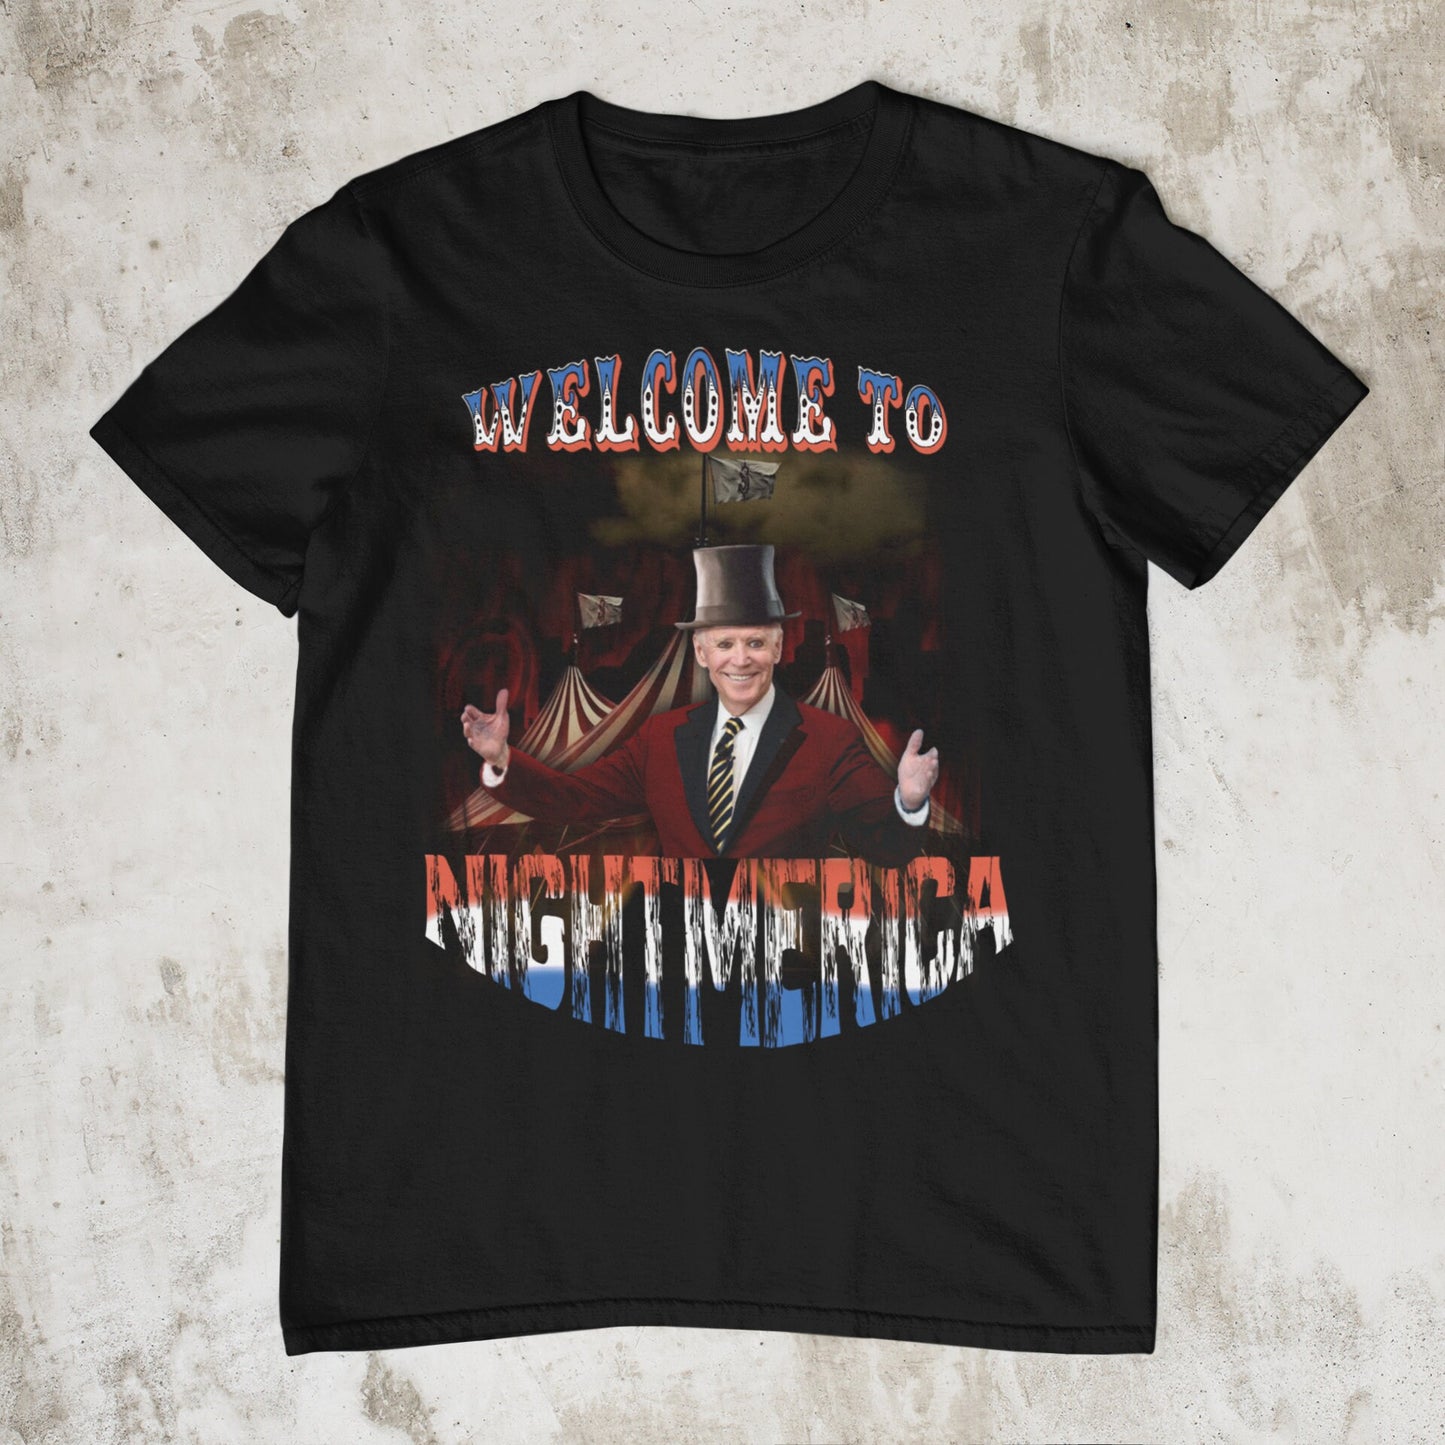 Welcome to Nightmerica - JOE BIDEN Circus - Custom Graphic DTG Printed Cotton T Shirt